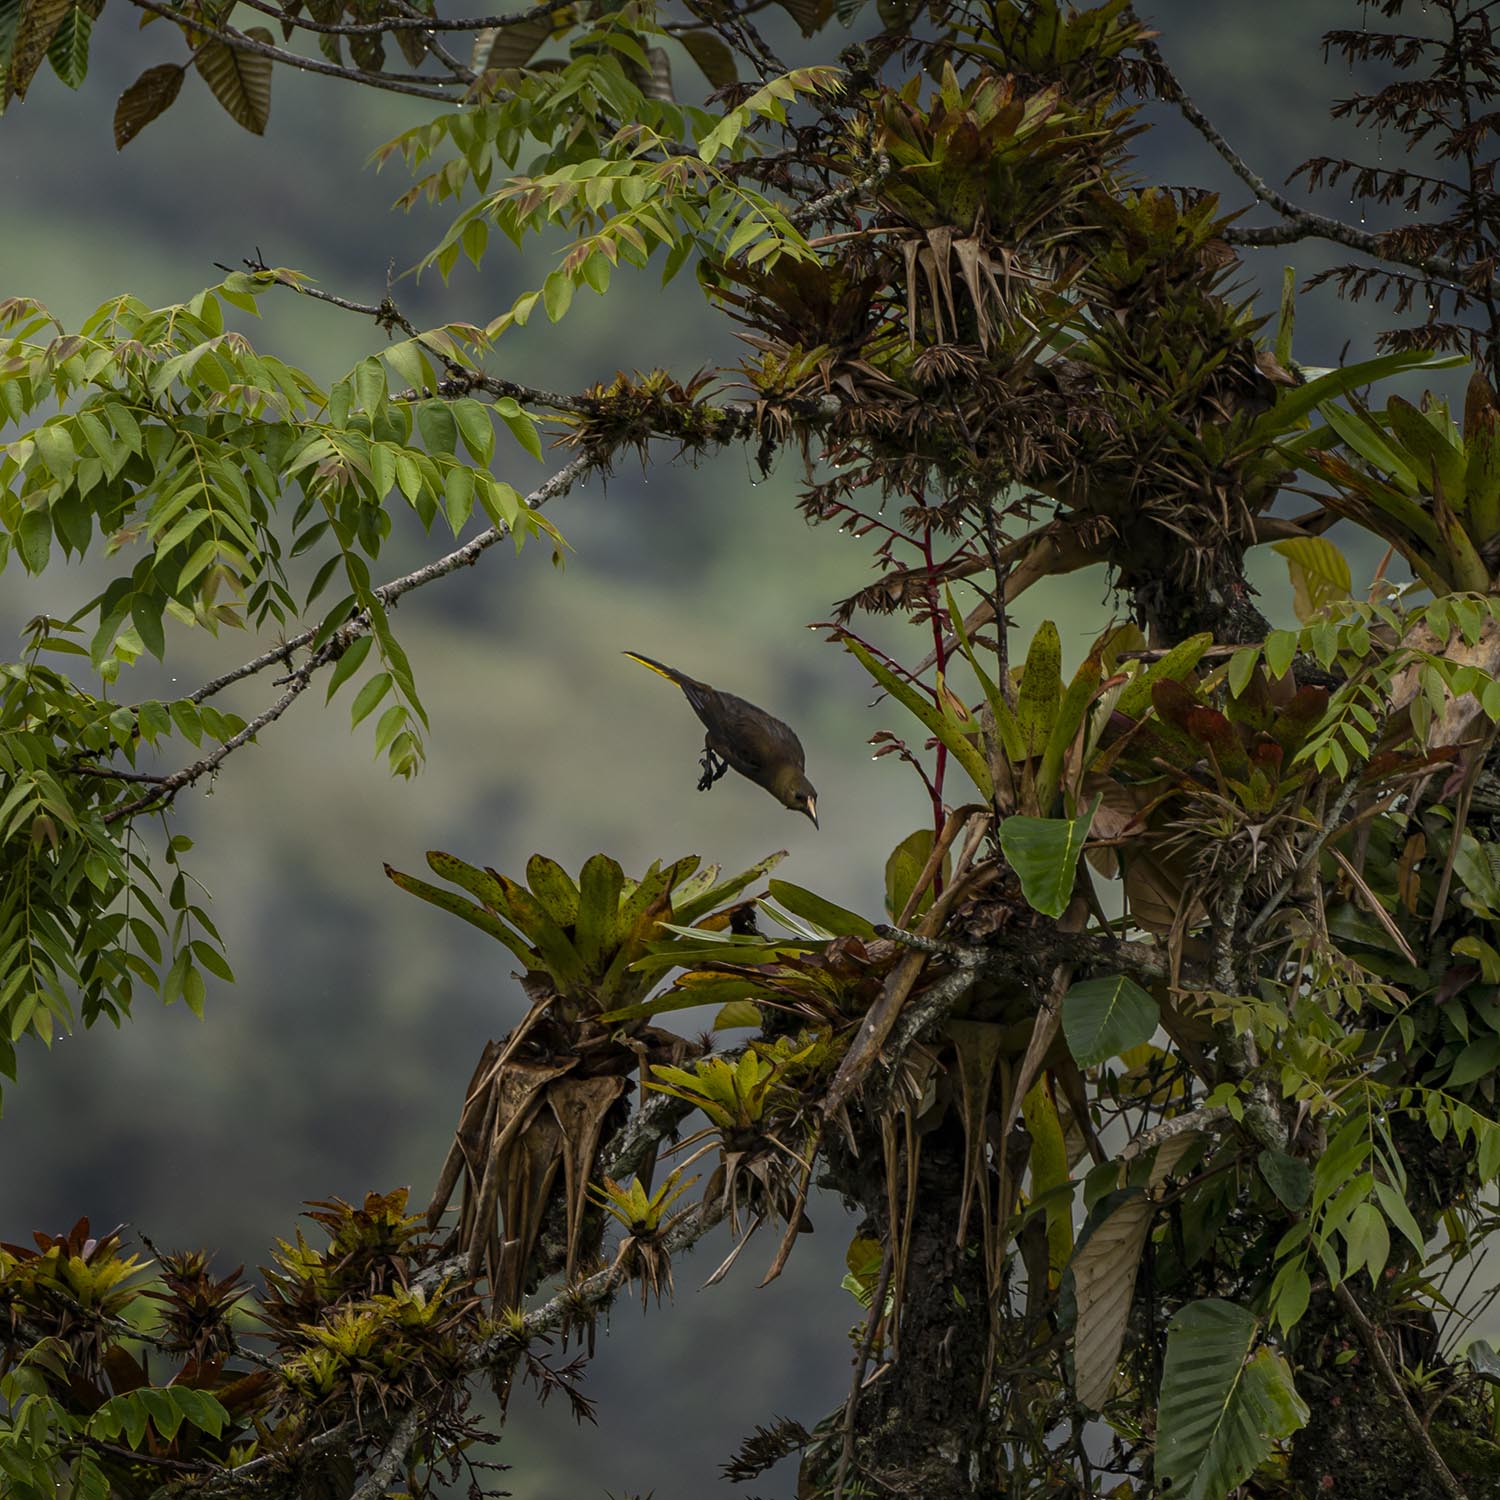 A black, tropical bird diving between foliage